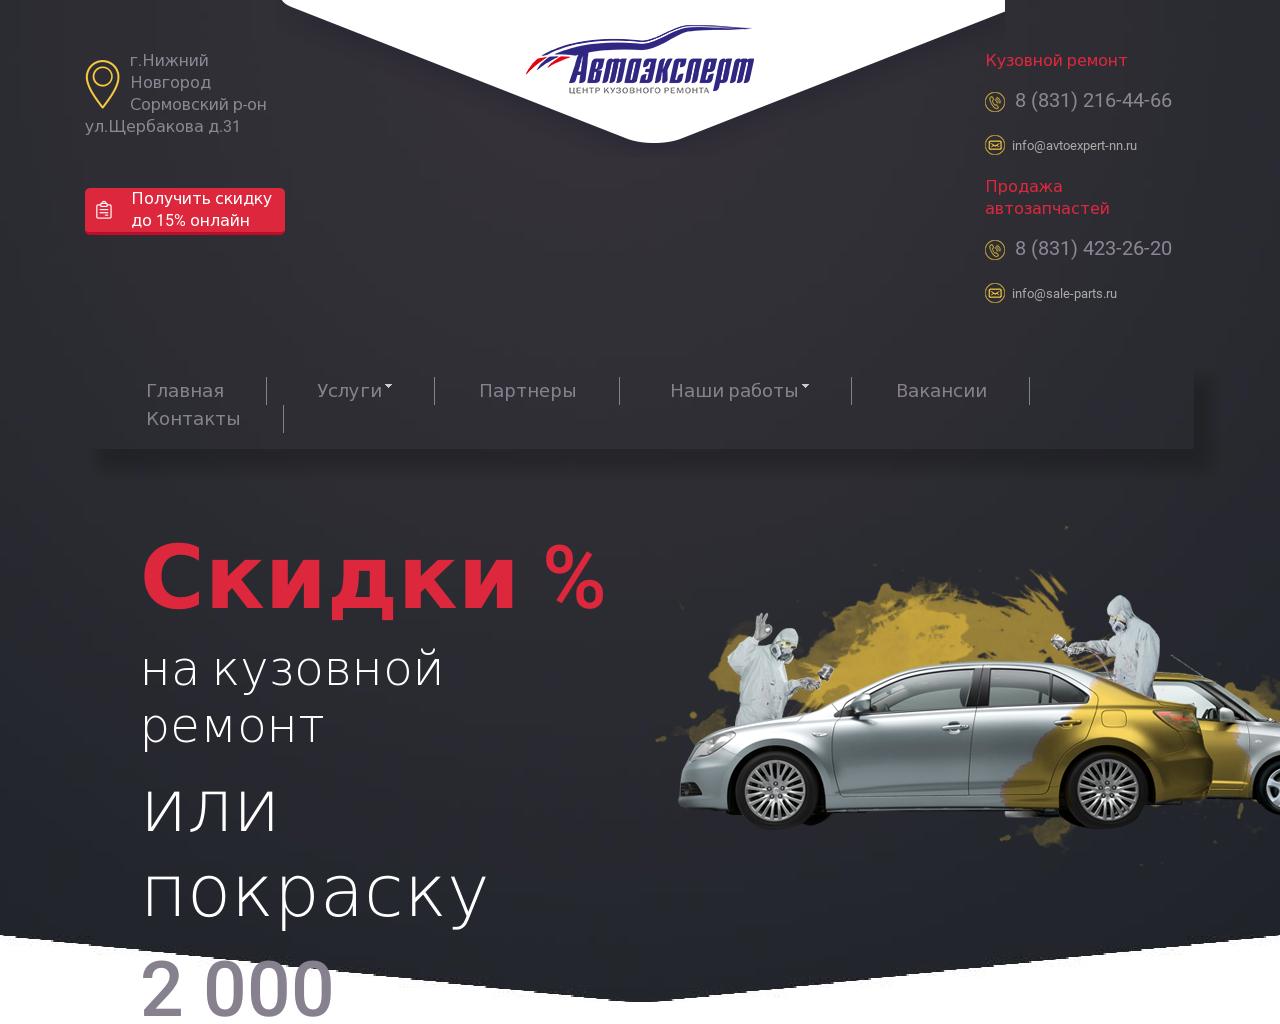 Изображение сайта avtoexpert-nn.ru в разрешении 1280x1024